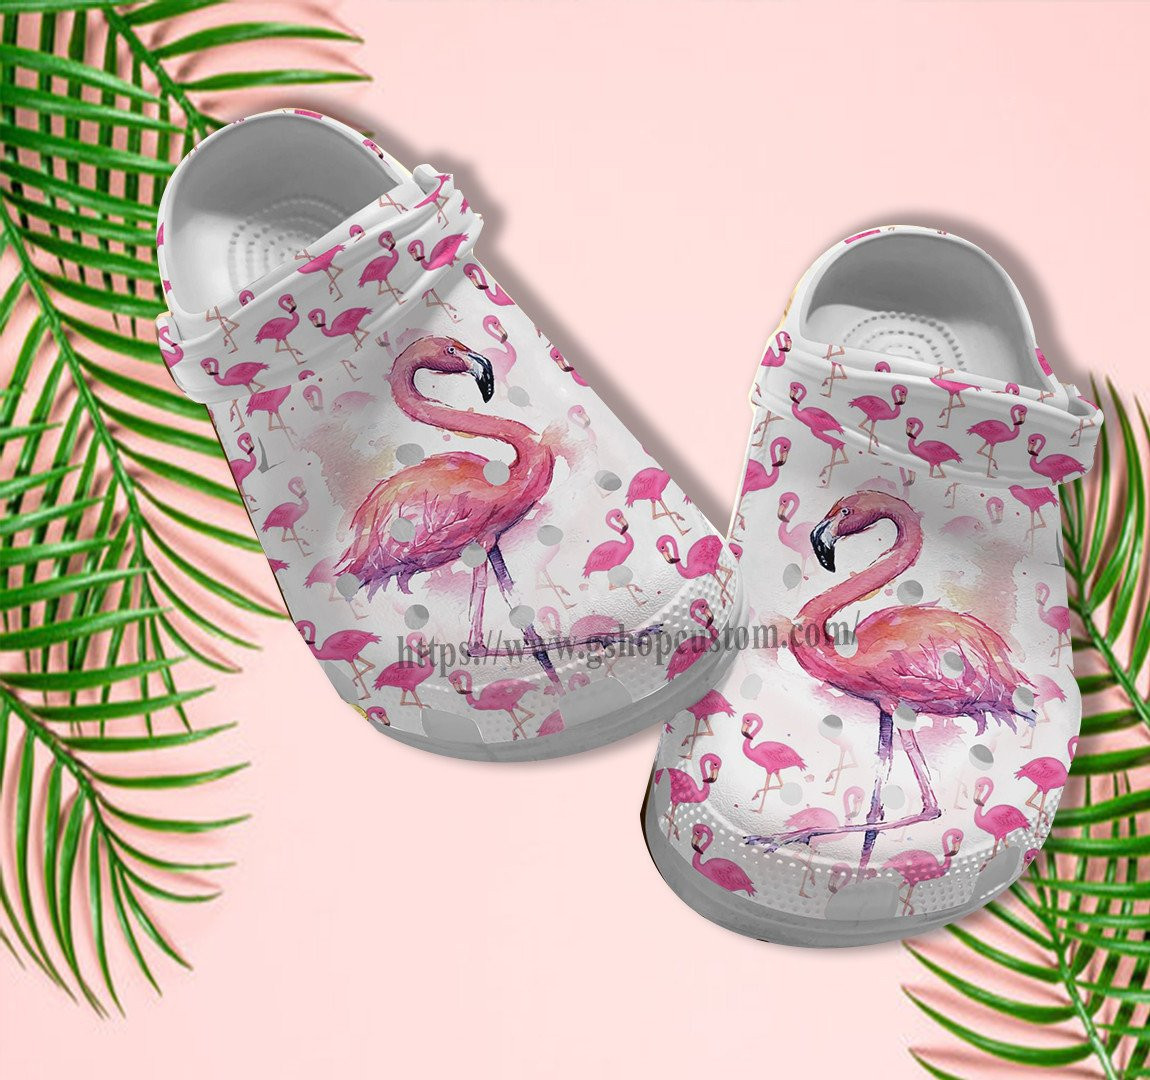 Flamingo Ballets Croc Shoes Gift Daughter- Flamingo Queen Art Shoes Croc Clogs Customize Gift Besties